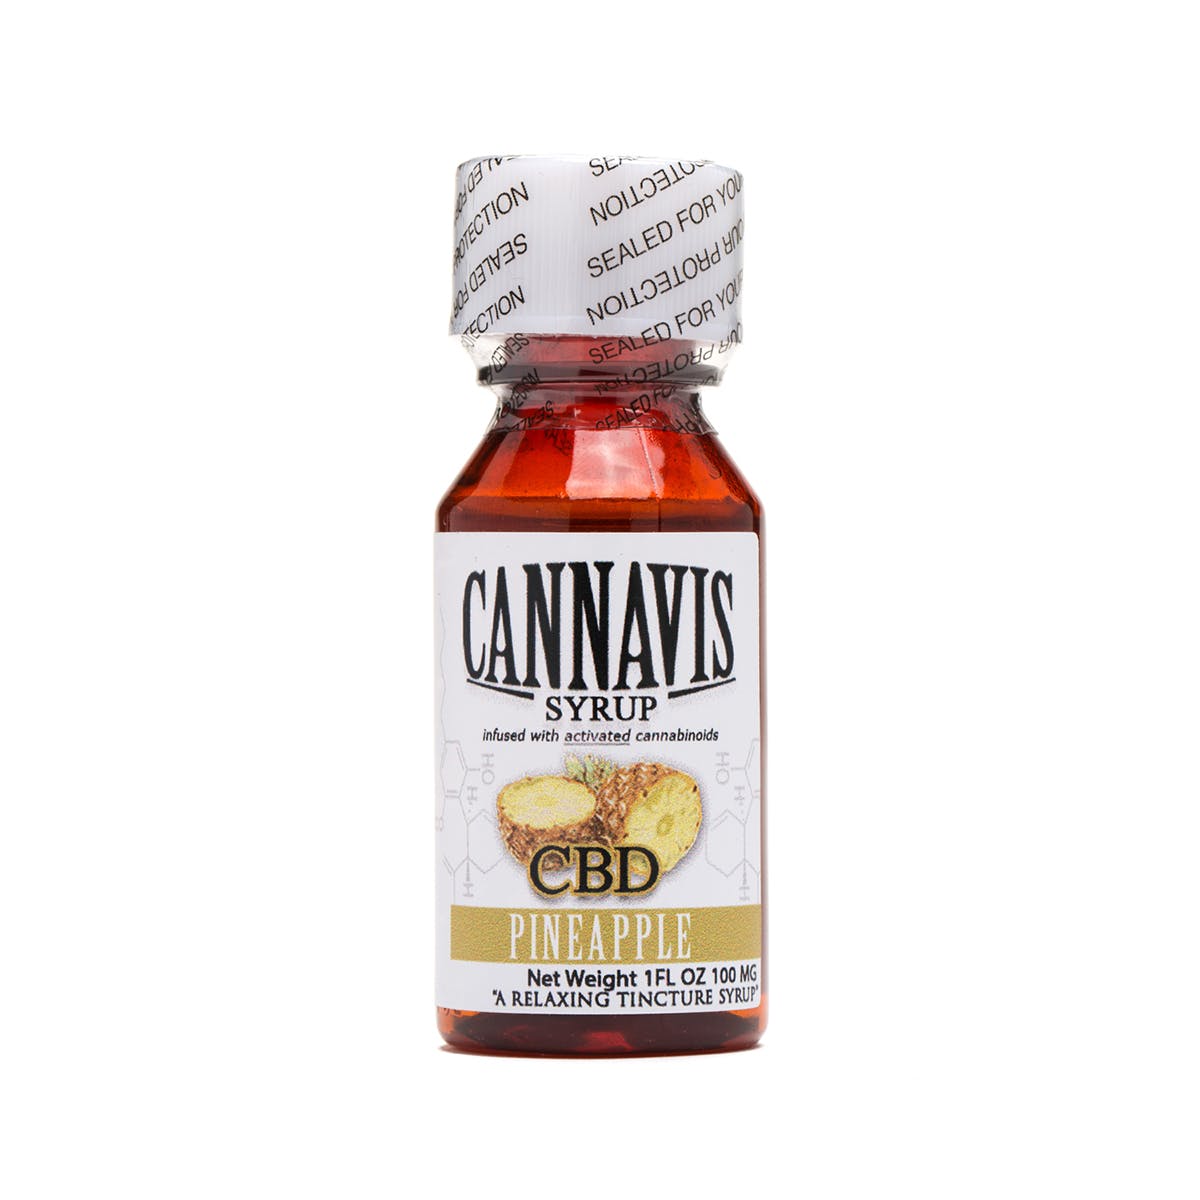 marijuana-dispensaries-oasis-caregivers-20-cap-in-los-angeles-cannavis-syrup-2c-cbd-pineapple-100mg